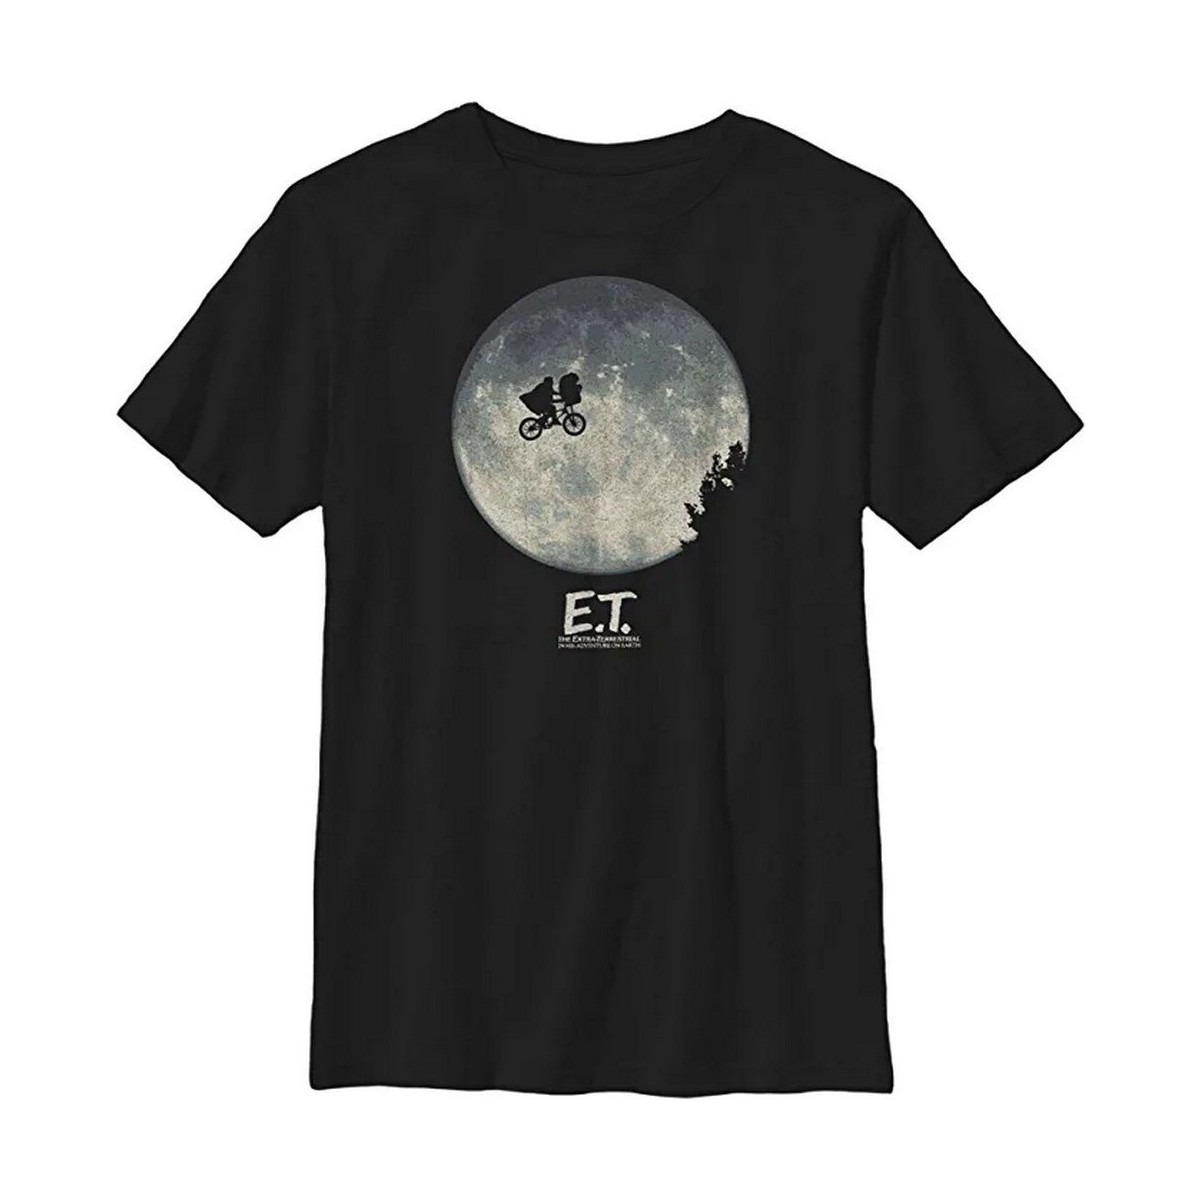 Vêtements Garçon T-shirts manches longues E.t. The Extra-Terrestrial Over The Moon Noir